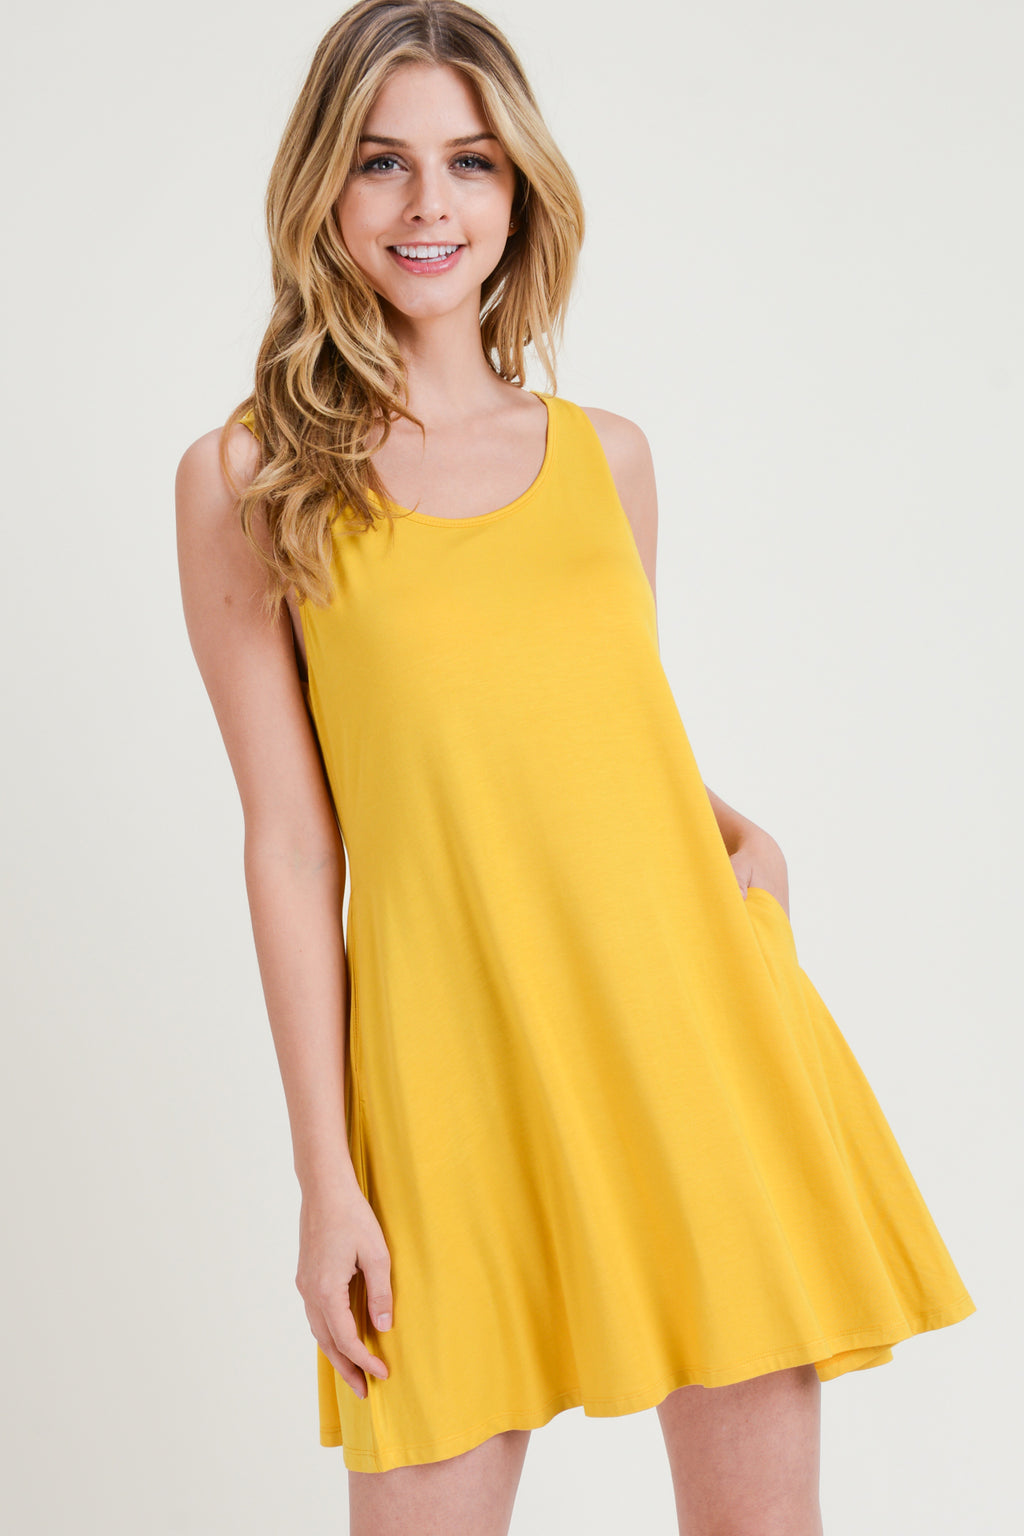 yellow tank dress for summer